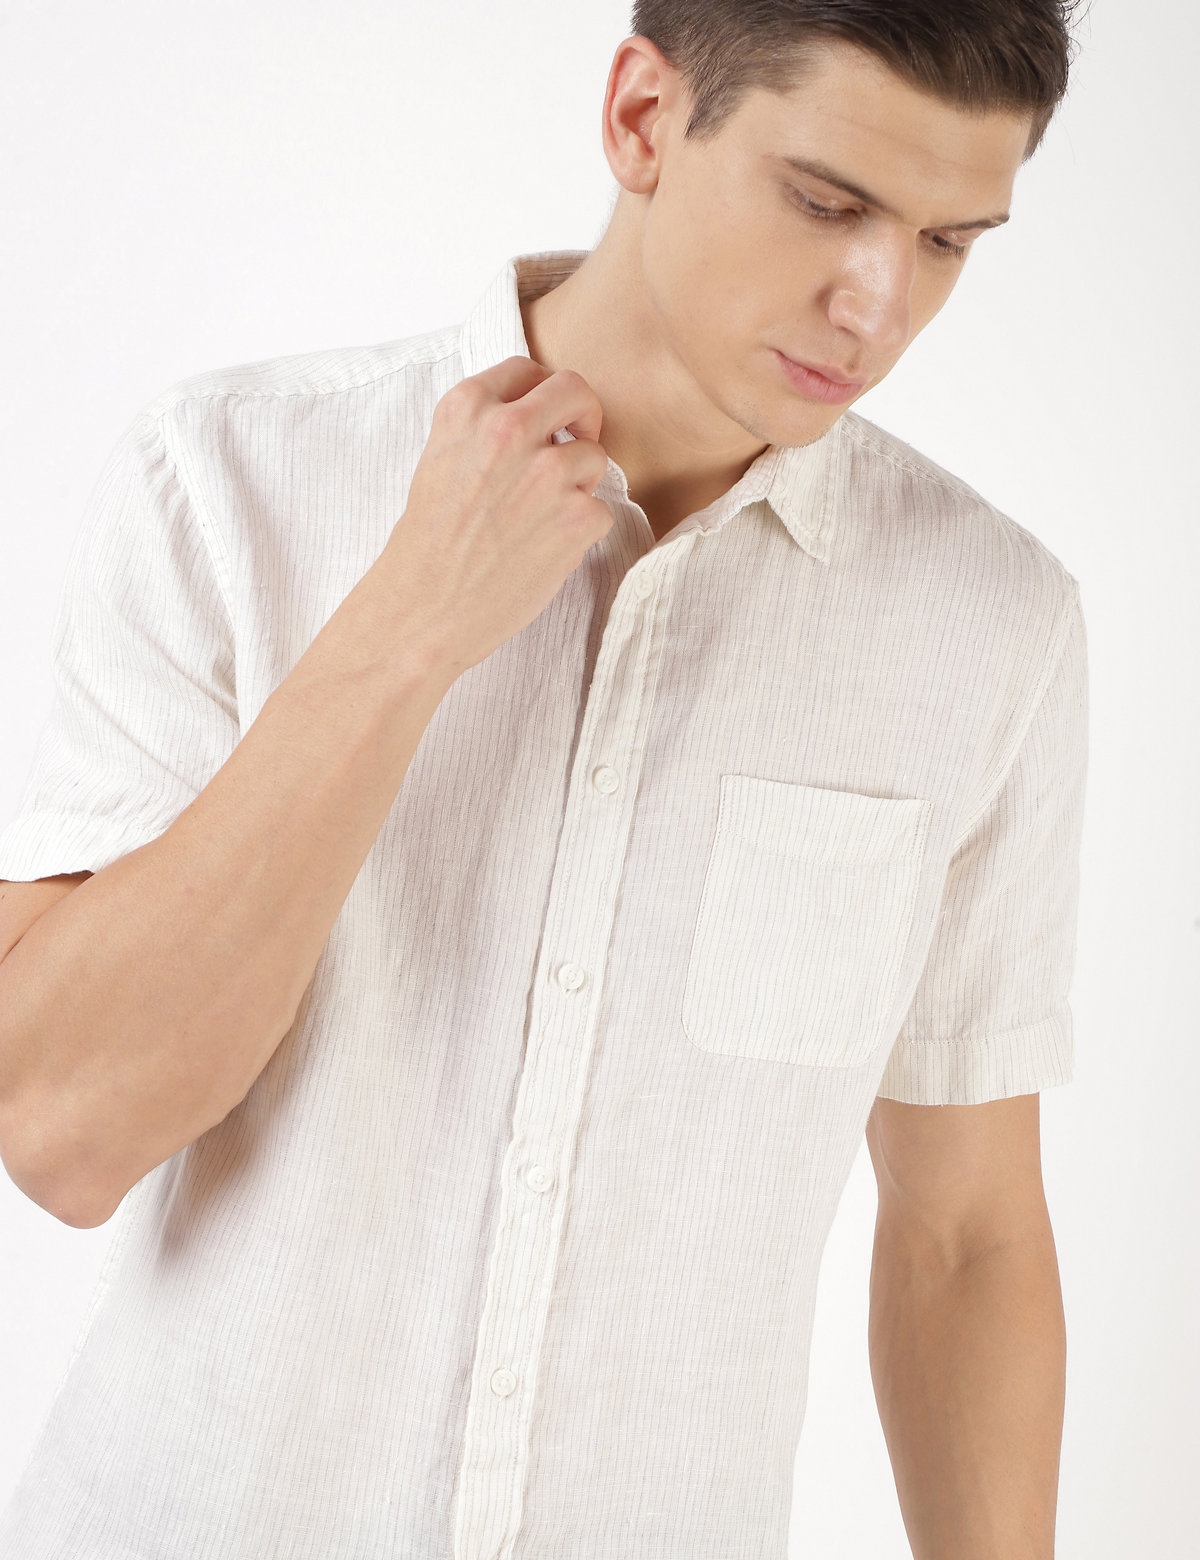 Pure Linen Striped Spread Collar Shirt